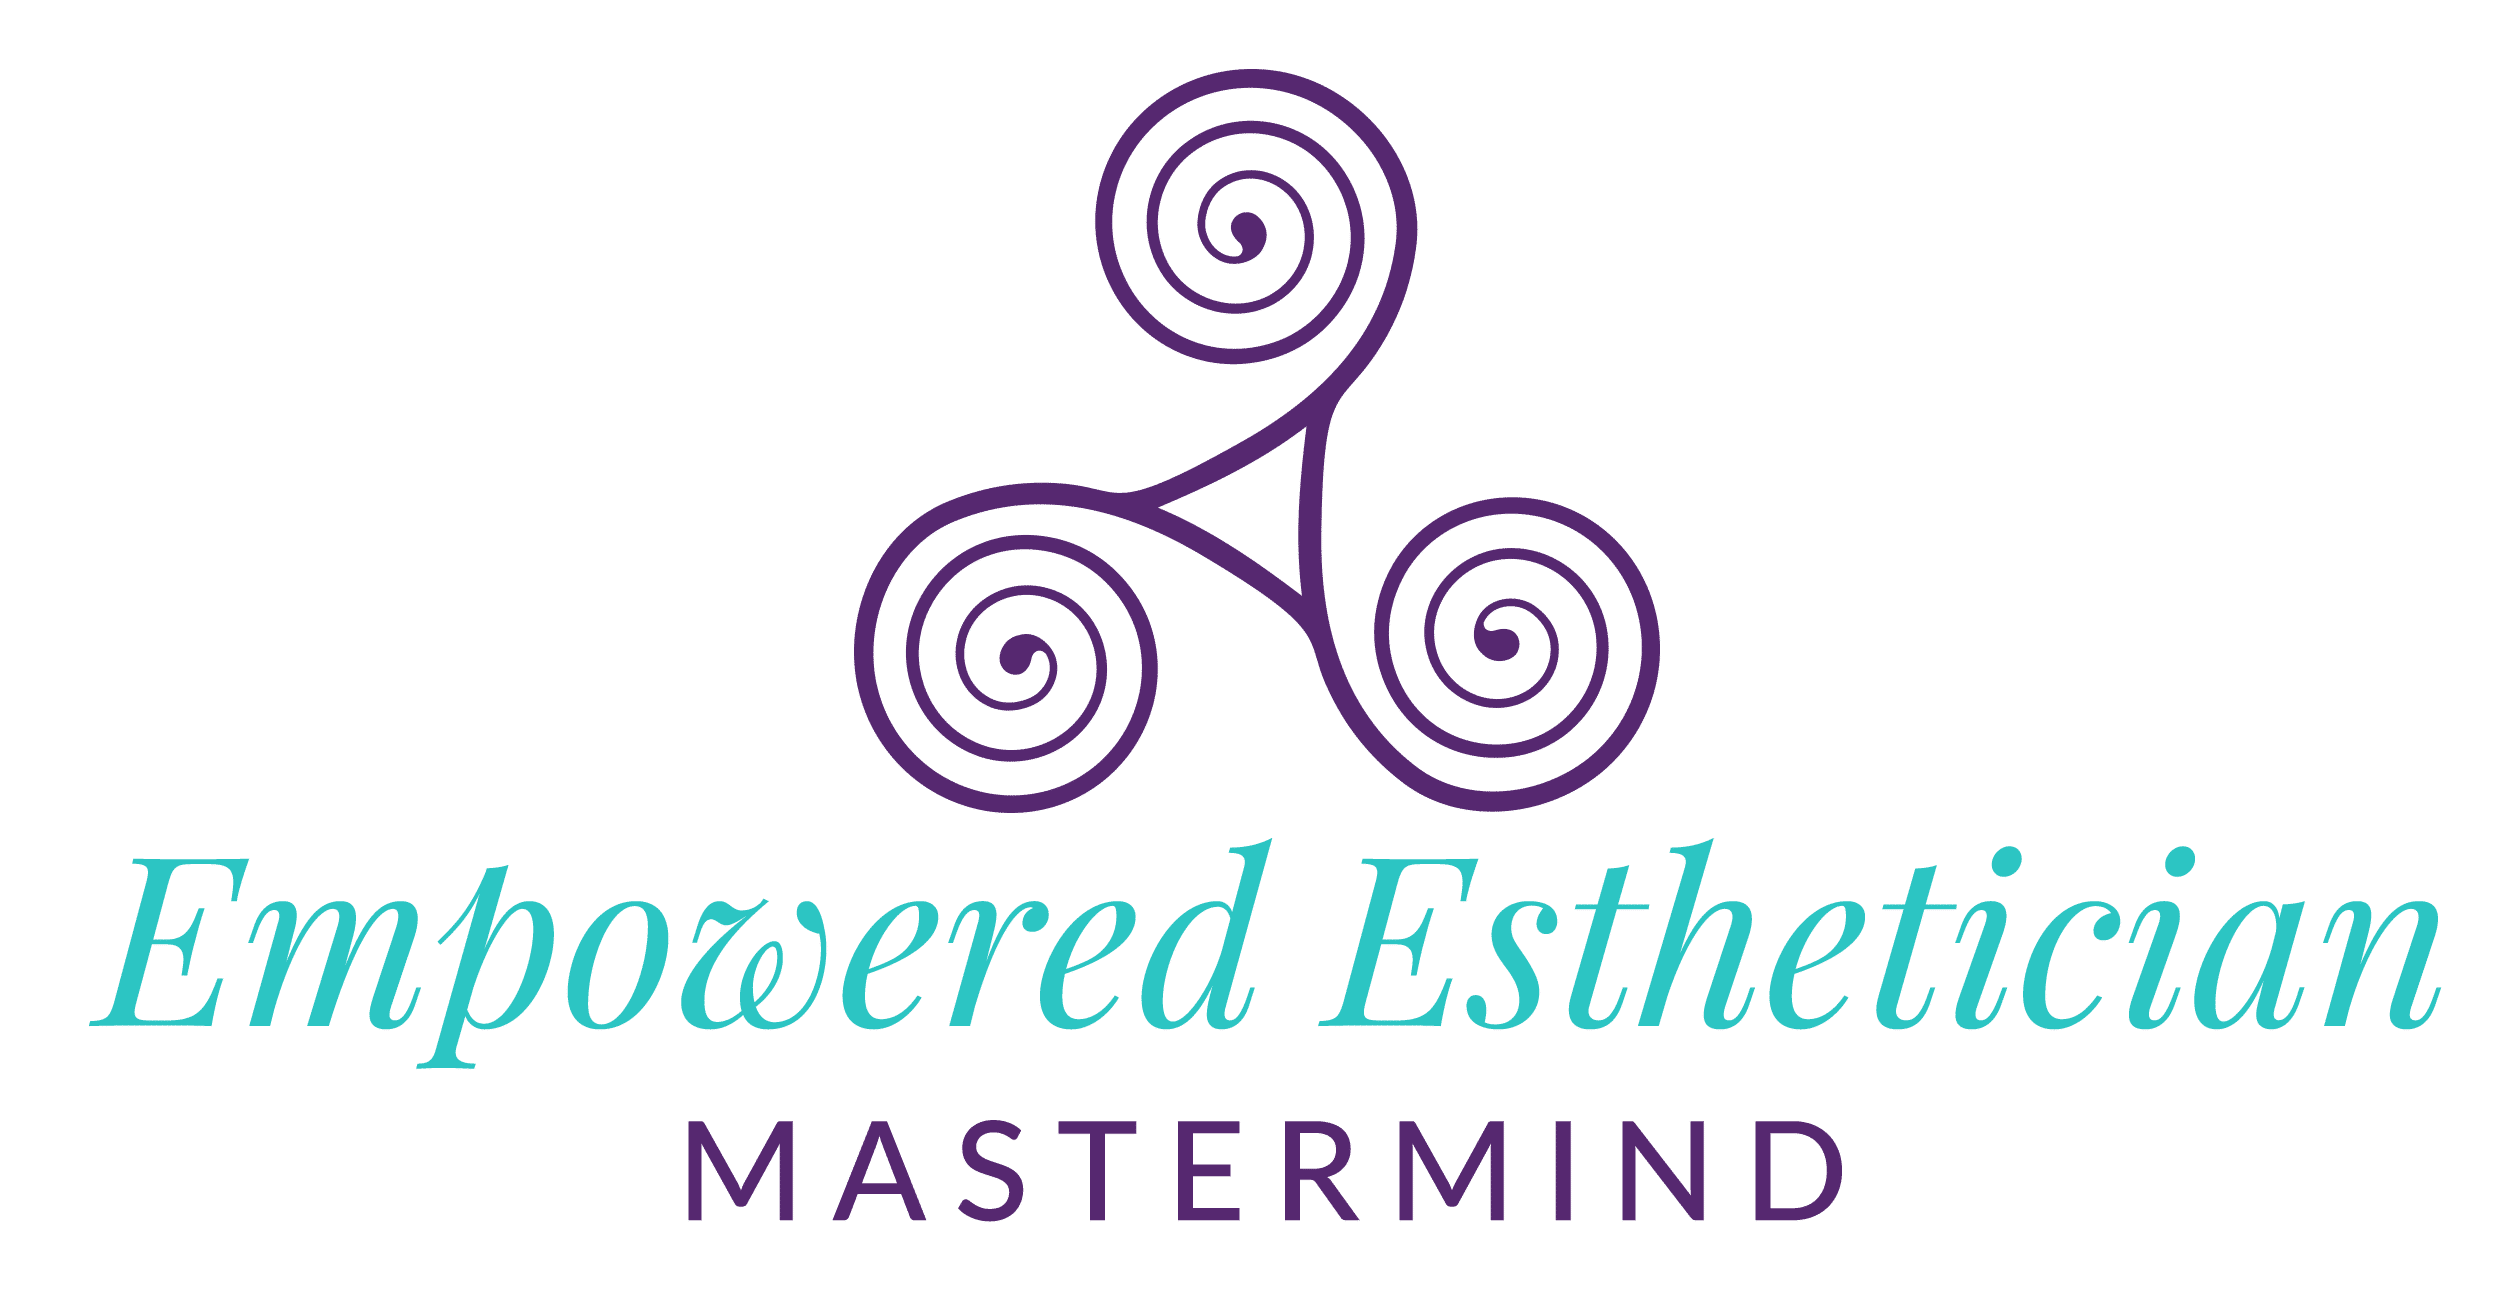 Empowered Esthetician Mastermind